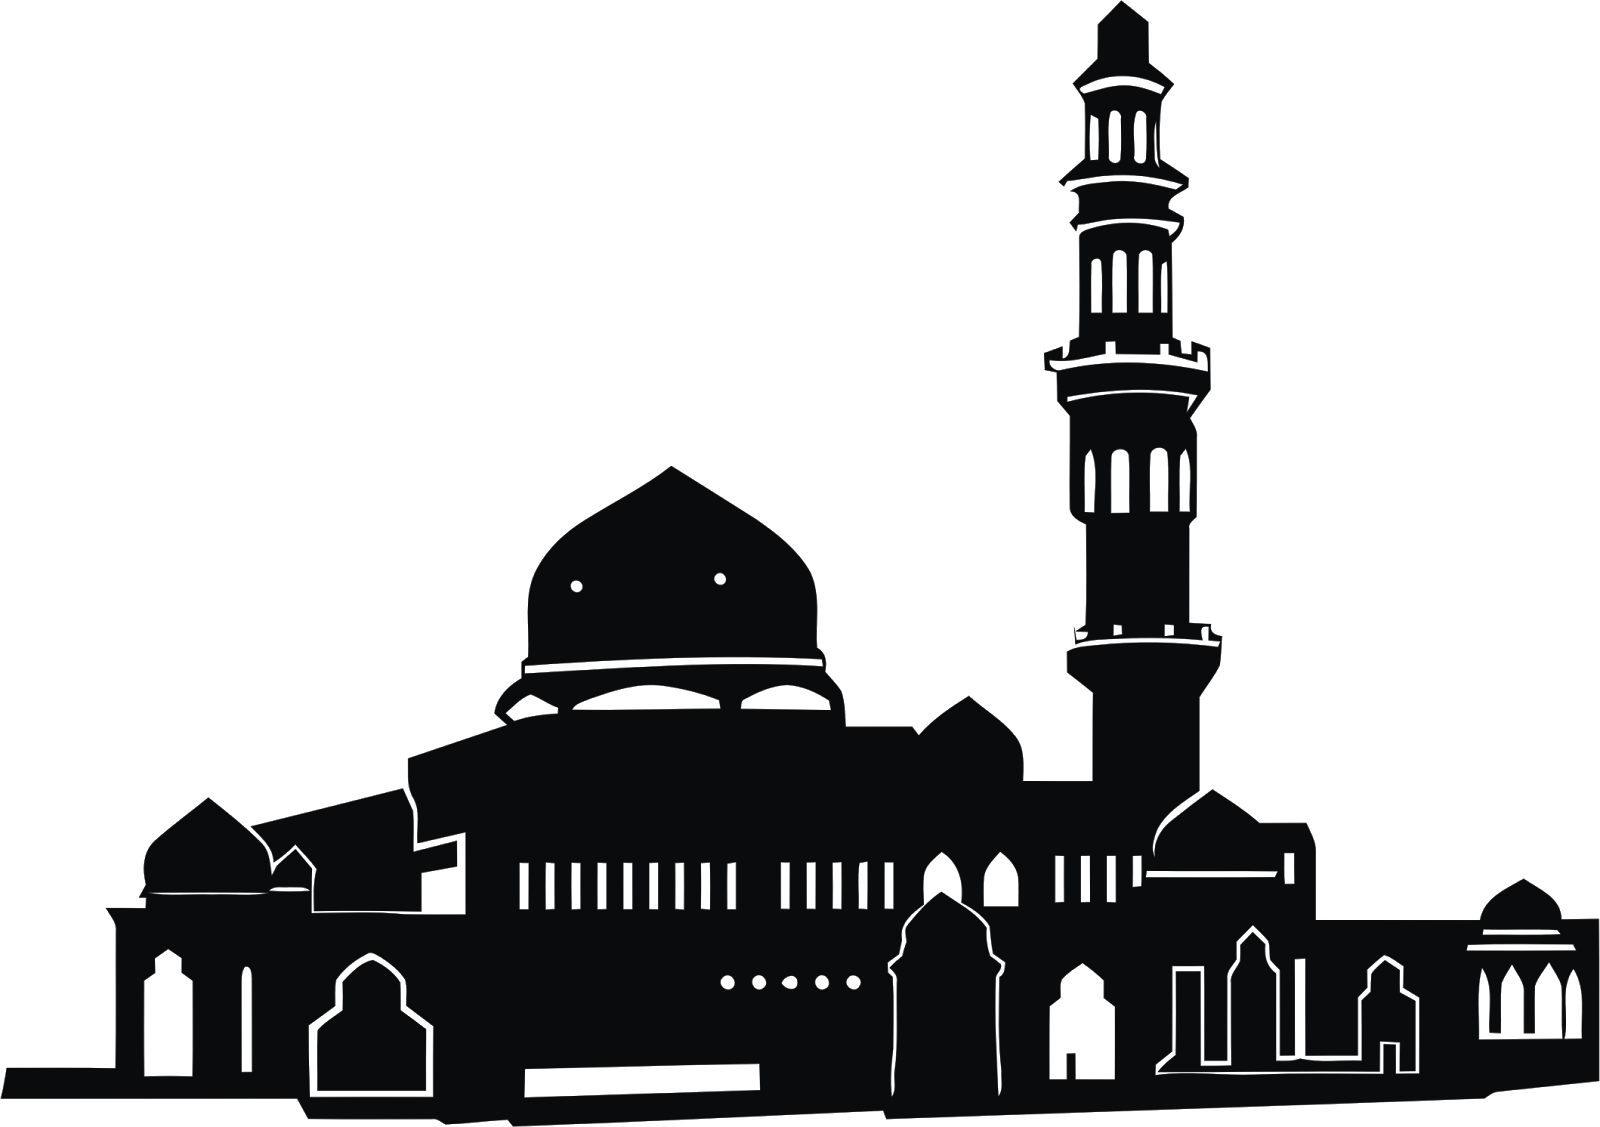 Gambar Ikon Masjid Hitam-Putih (Picture of the Black-White Mosque Icon